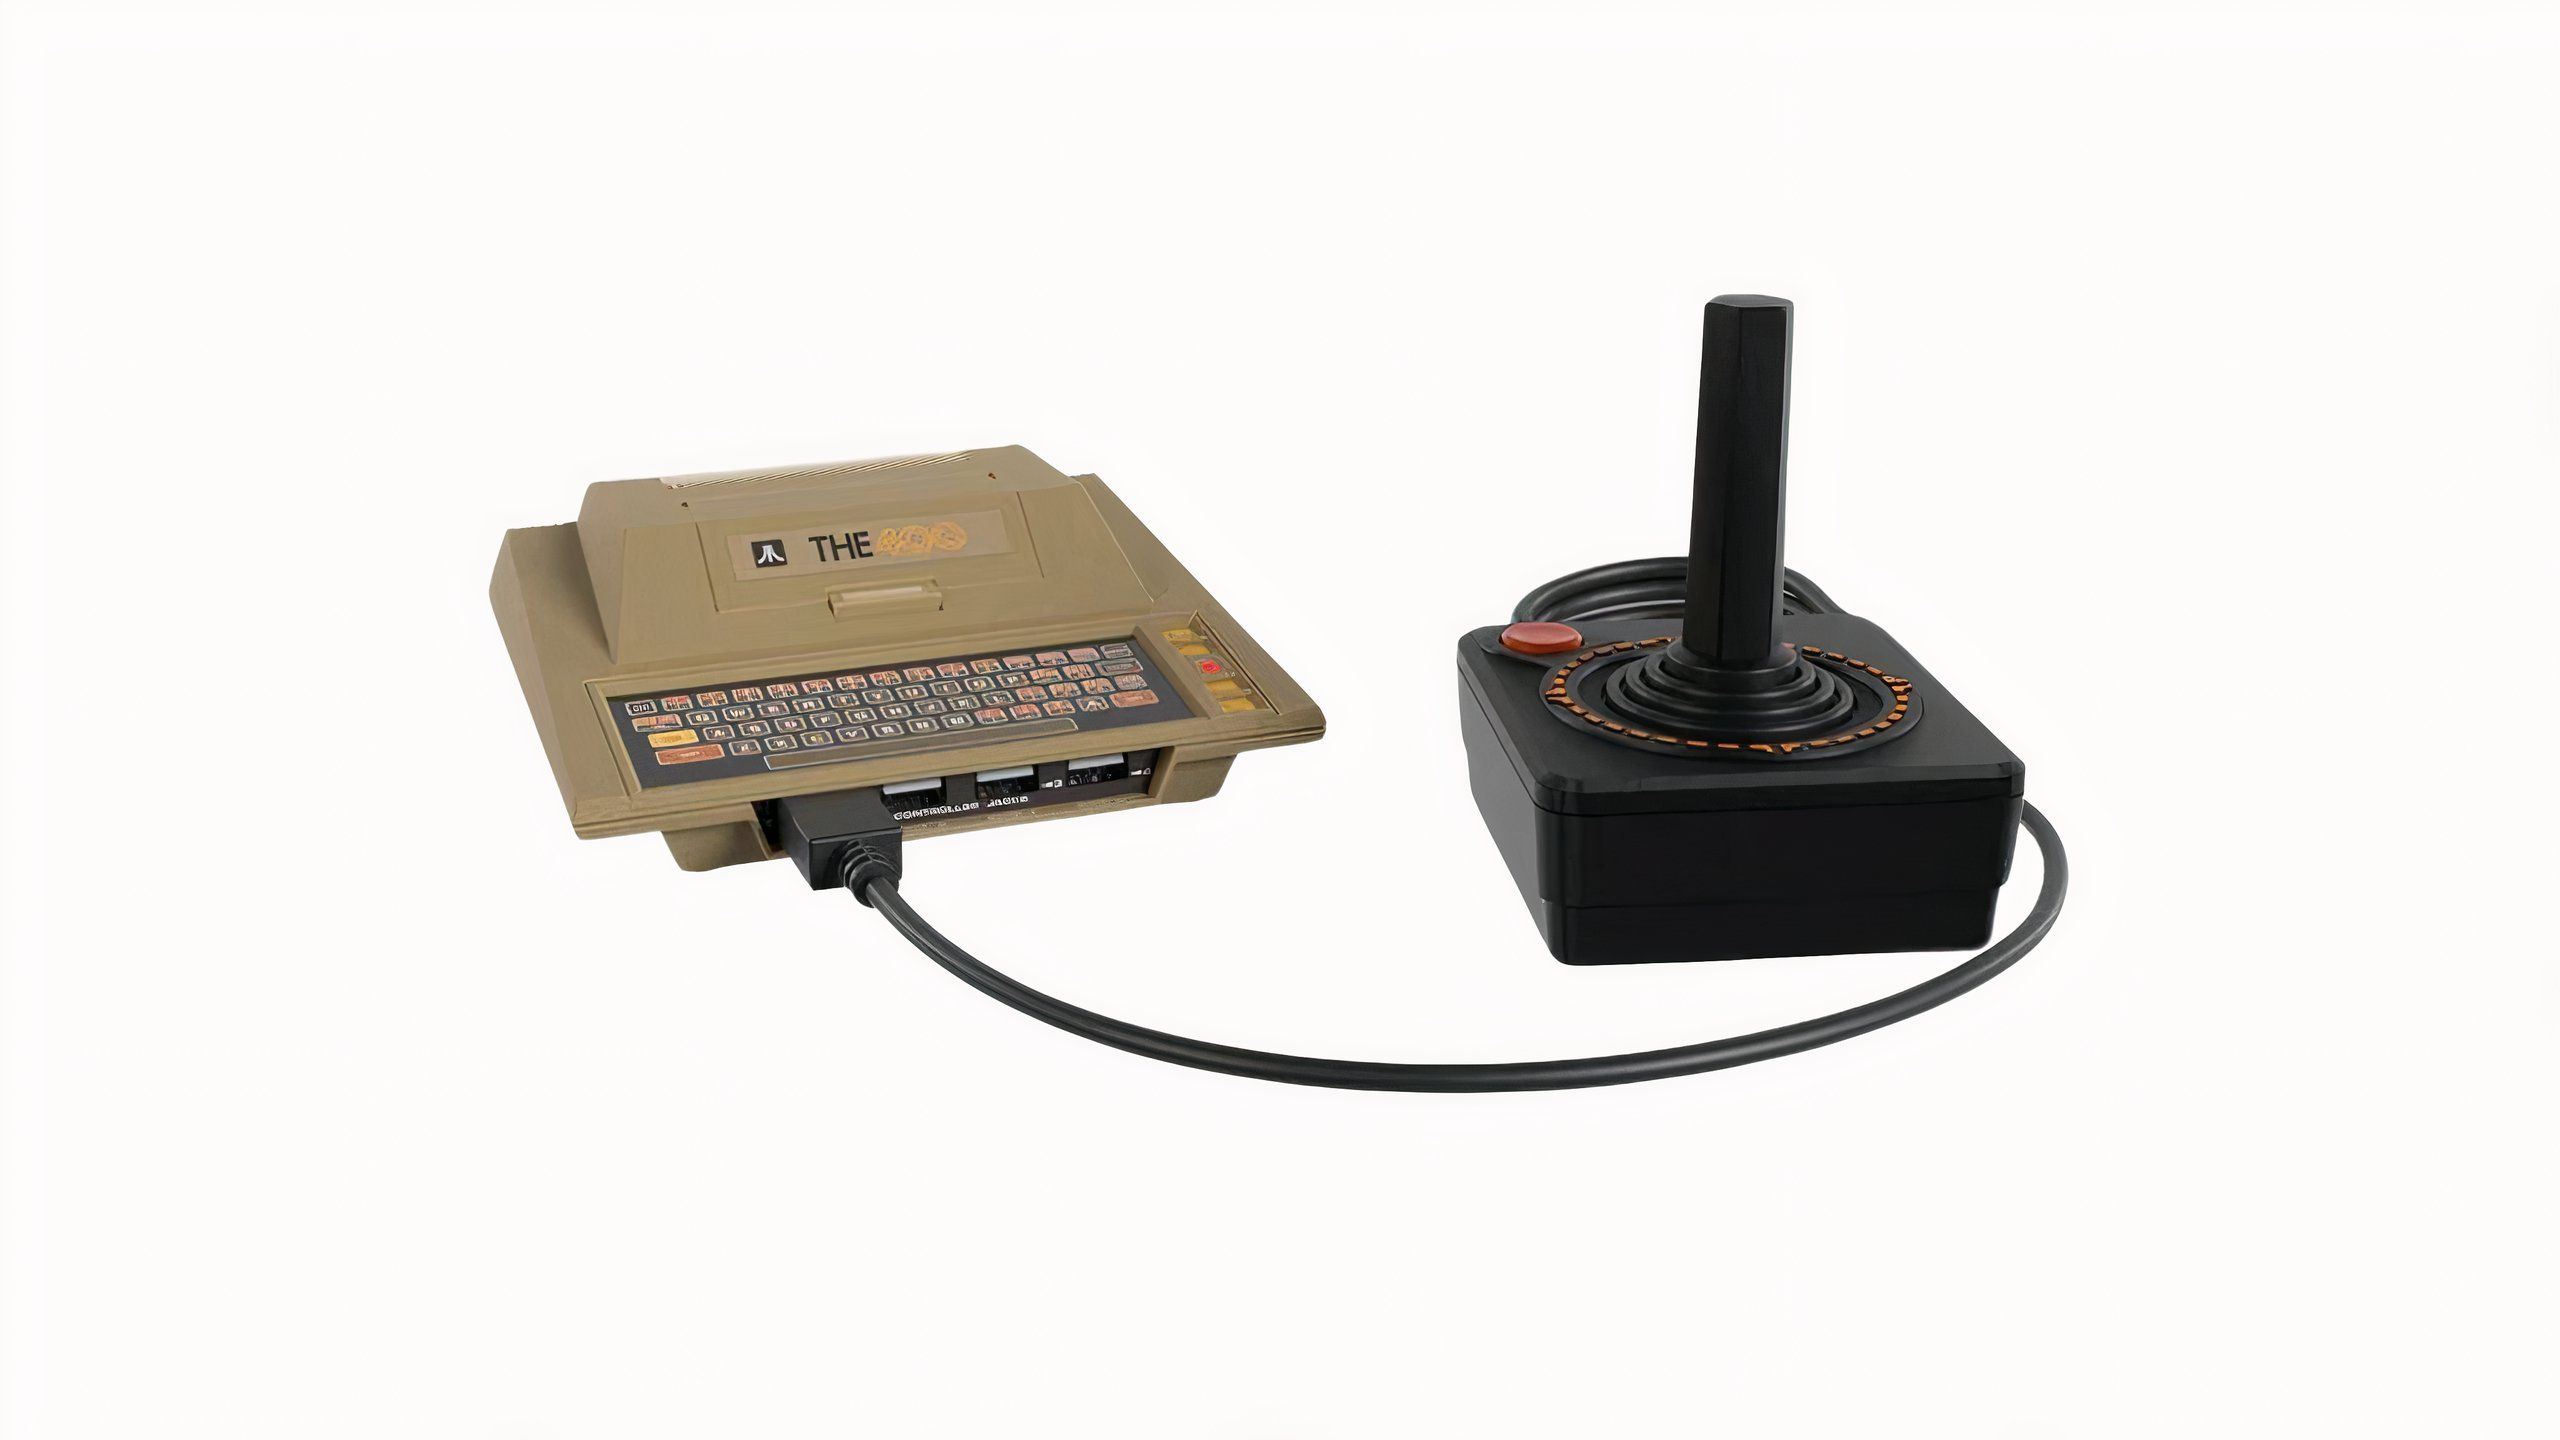 Atari THE400 mini gaming console